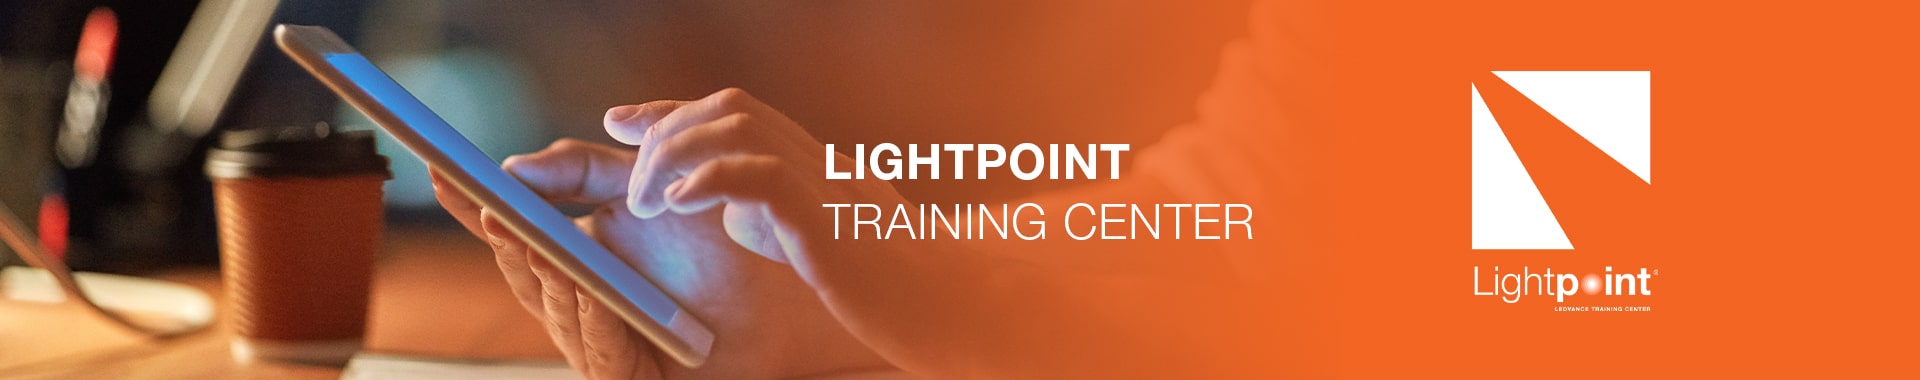 lightpoint training center